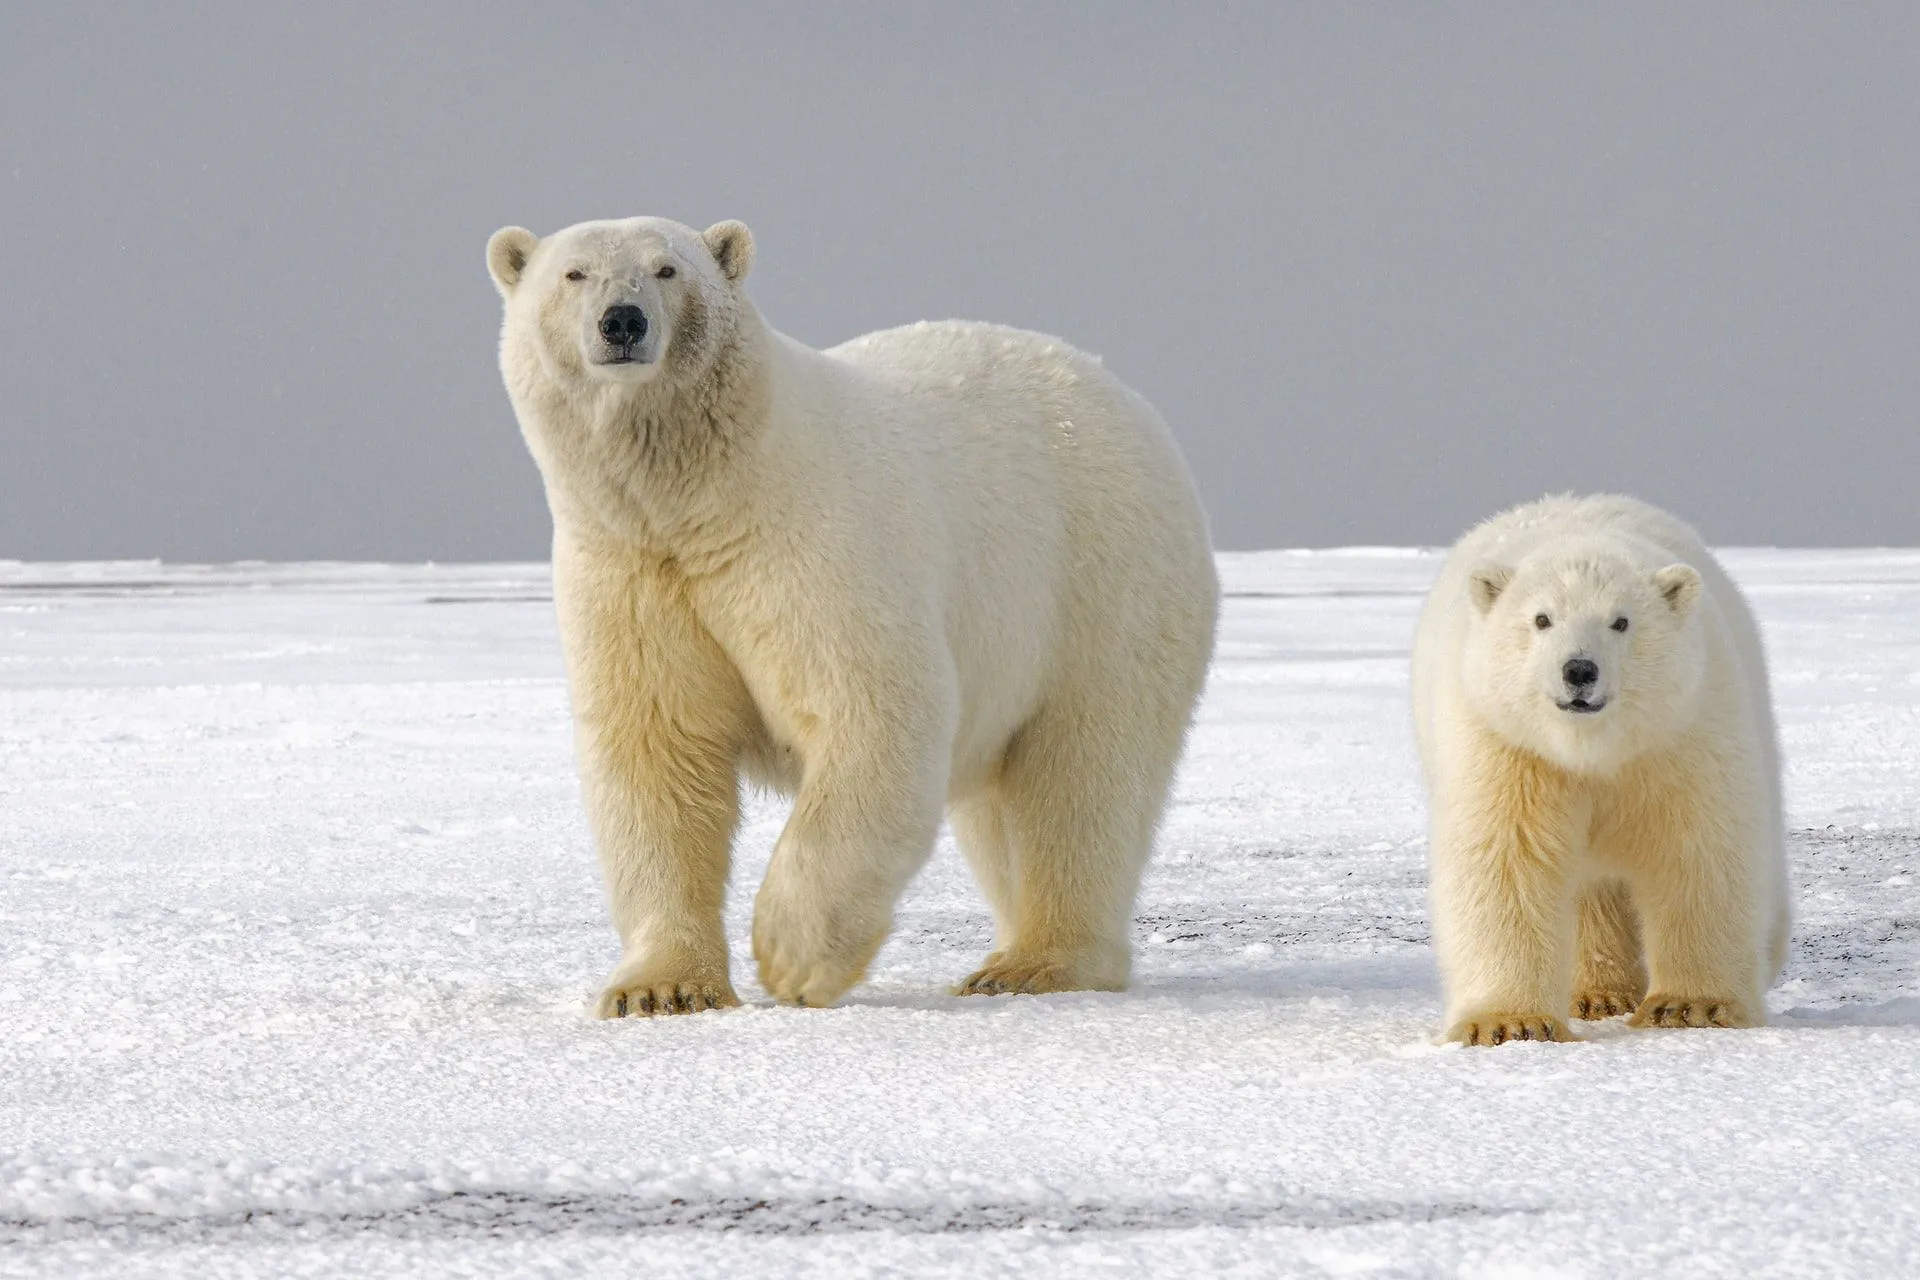 A polar bear cub can walk up to 19 mi (30 km) per day.